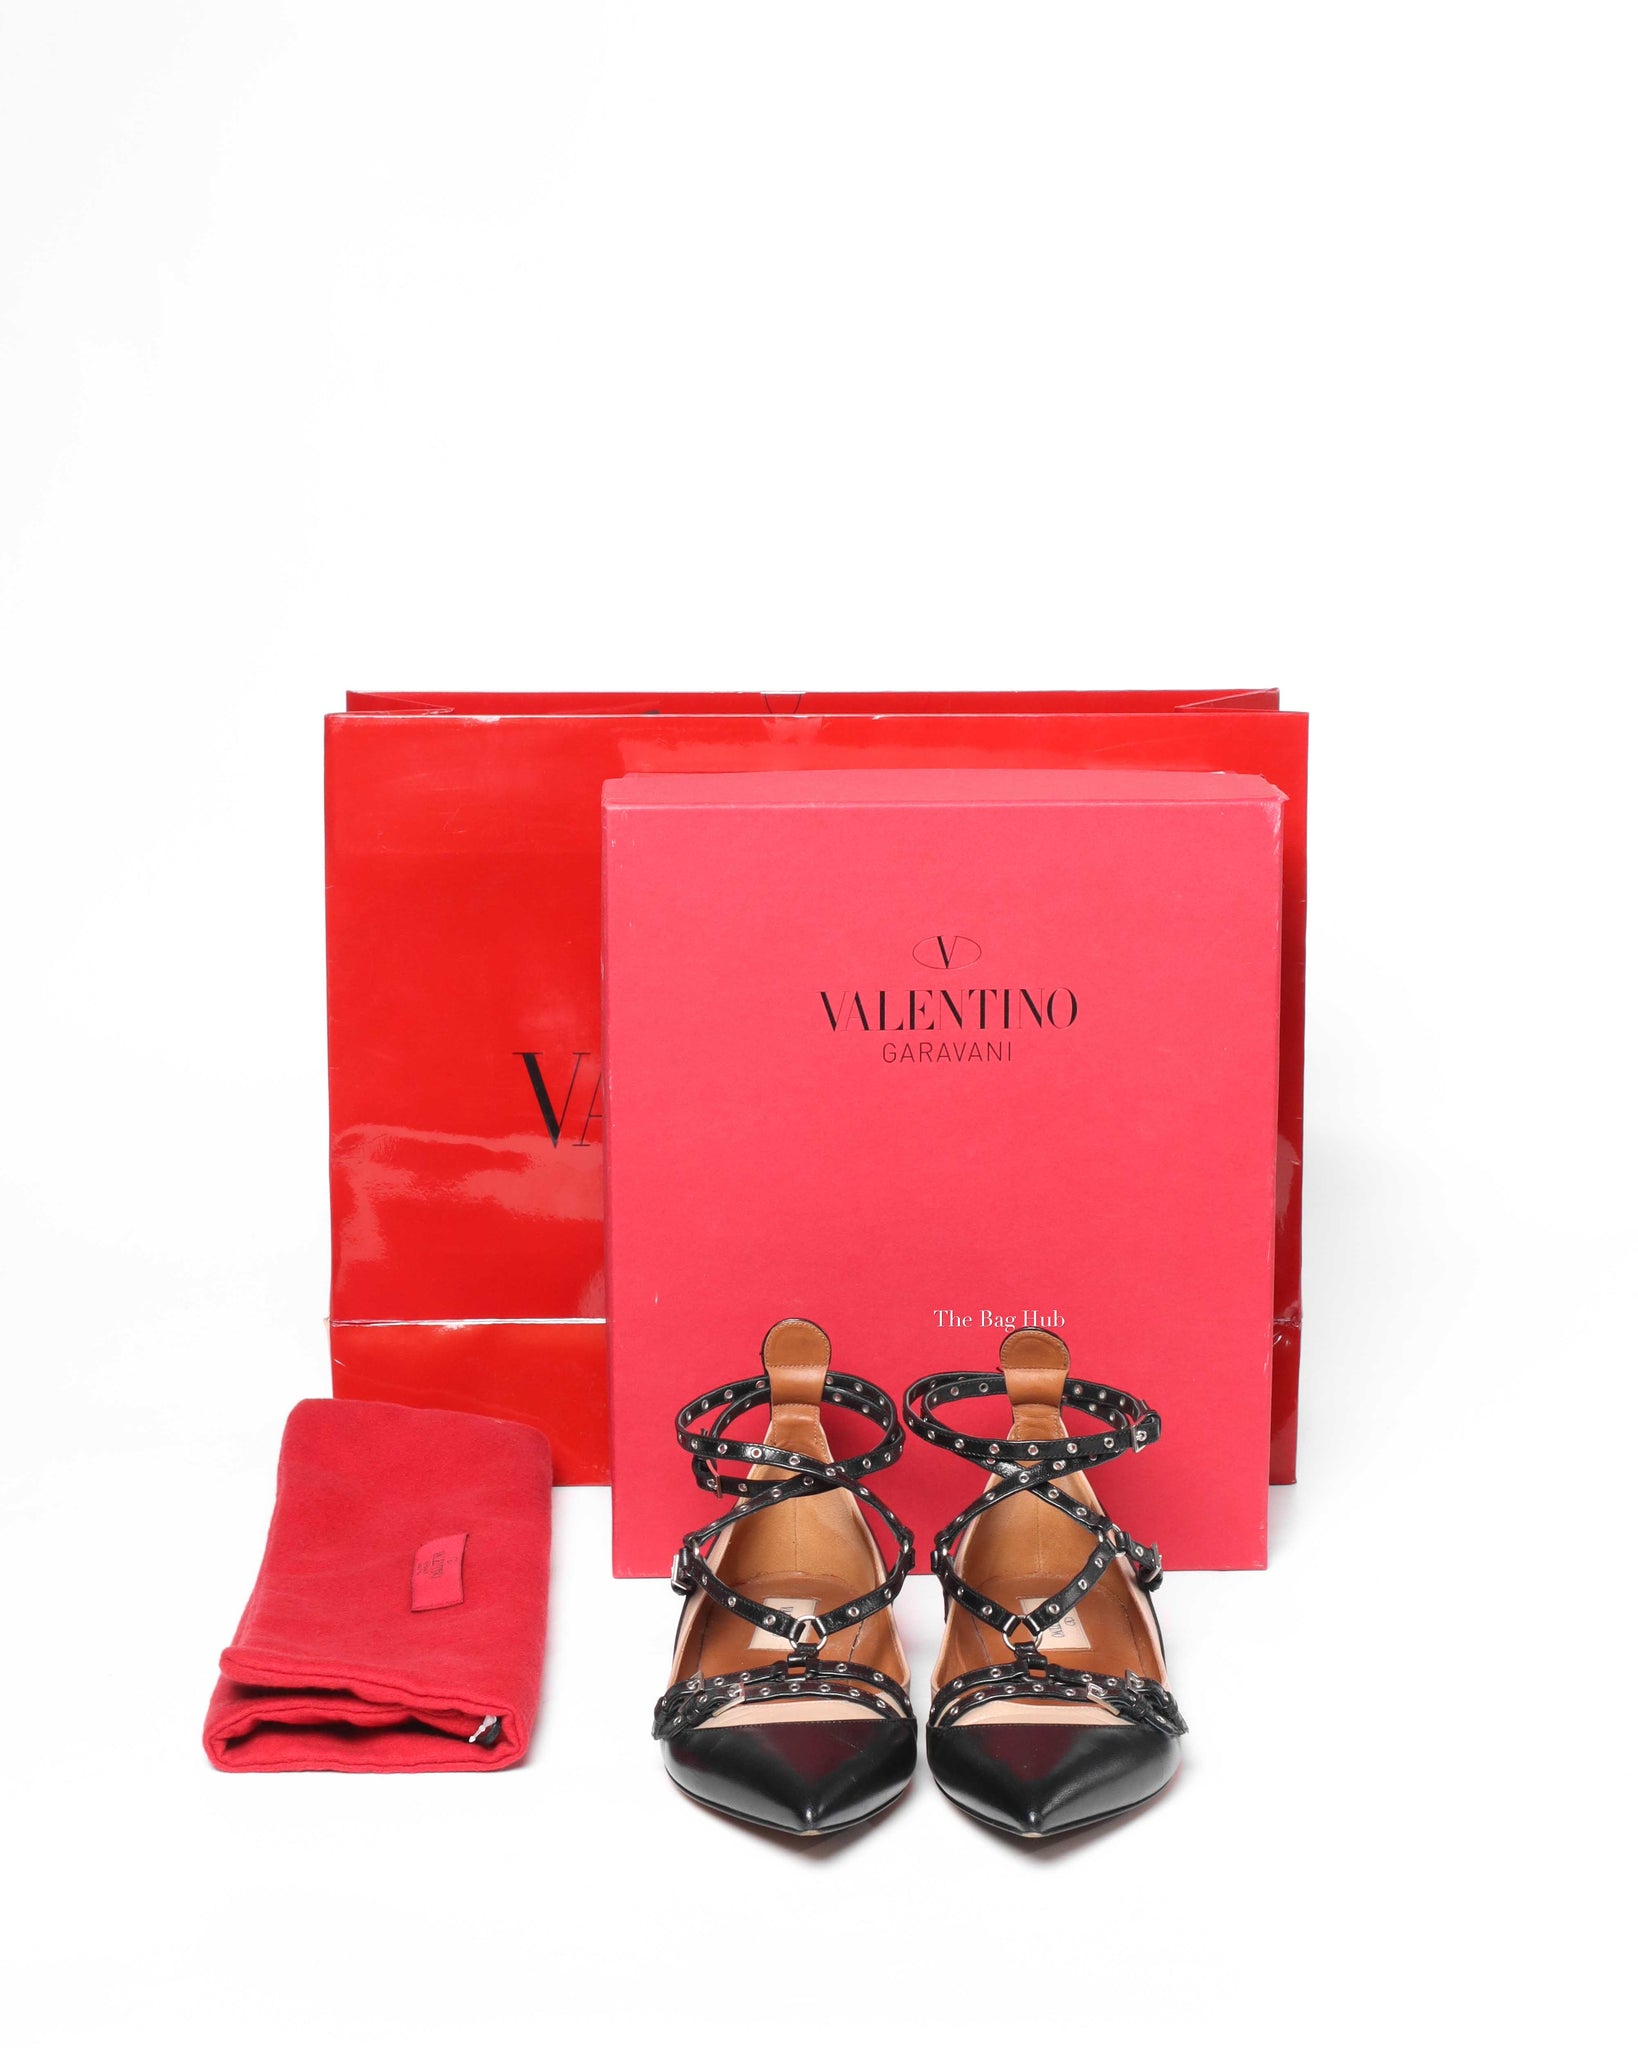 Valentino Garavani Black/Beige Leather Love Latch Caged Flats Size 37.5-9